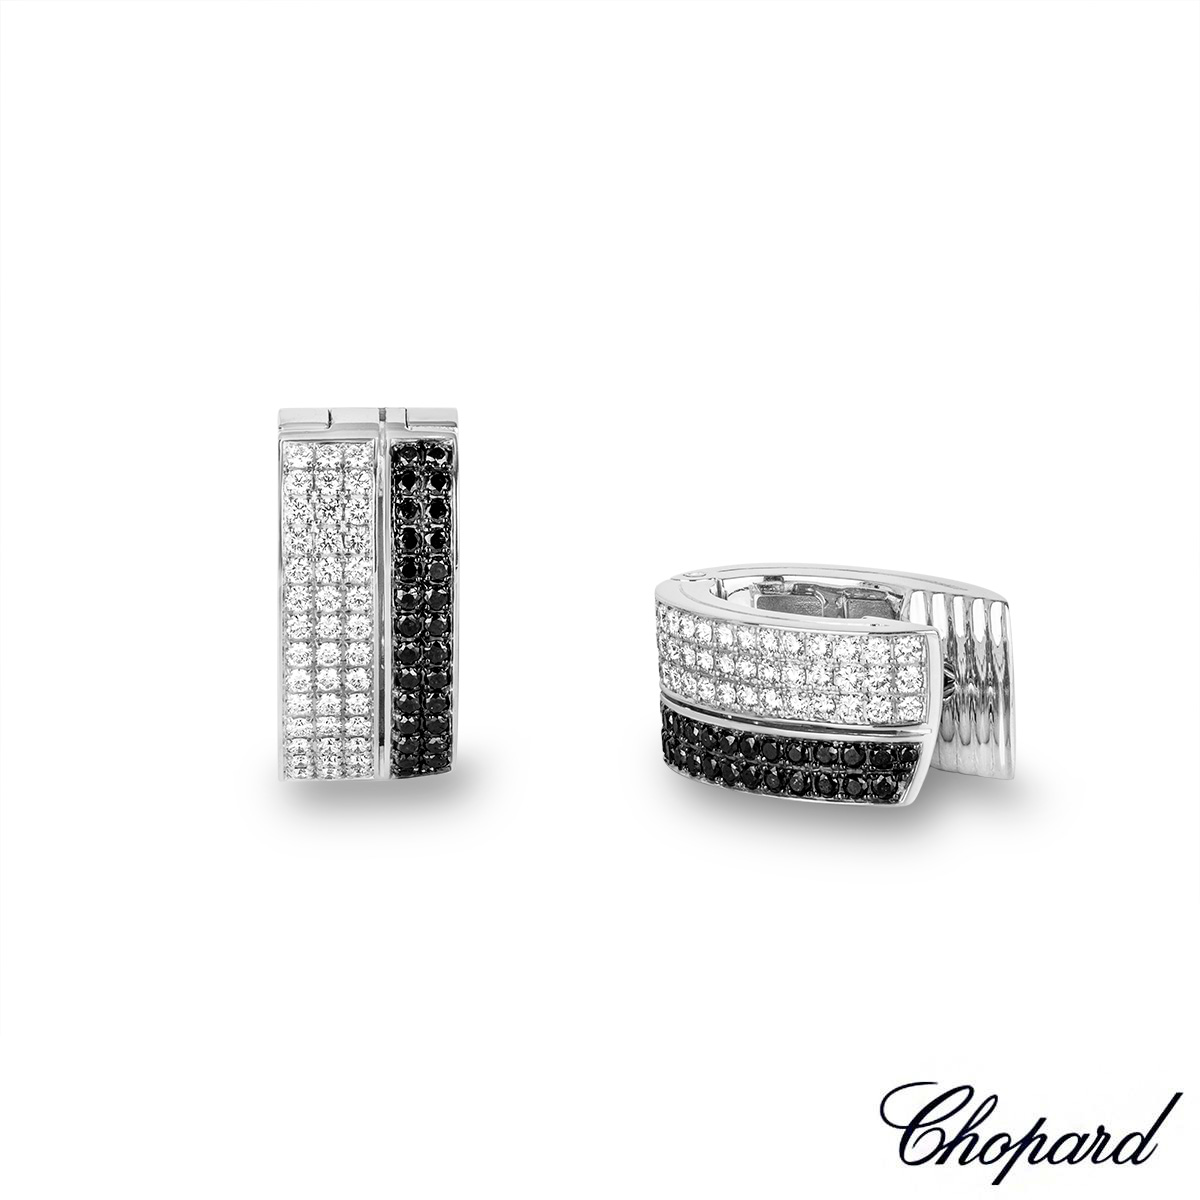 Chopard White Gold Diamond Set Hoop Earrings 844073-1001